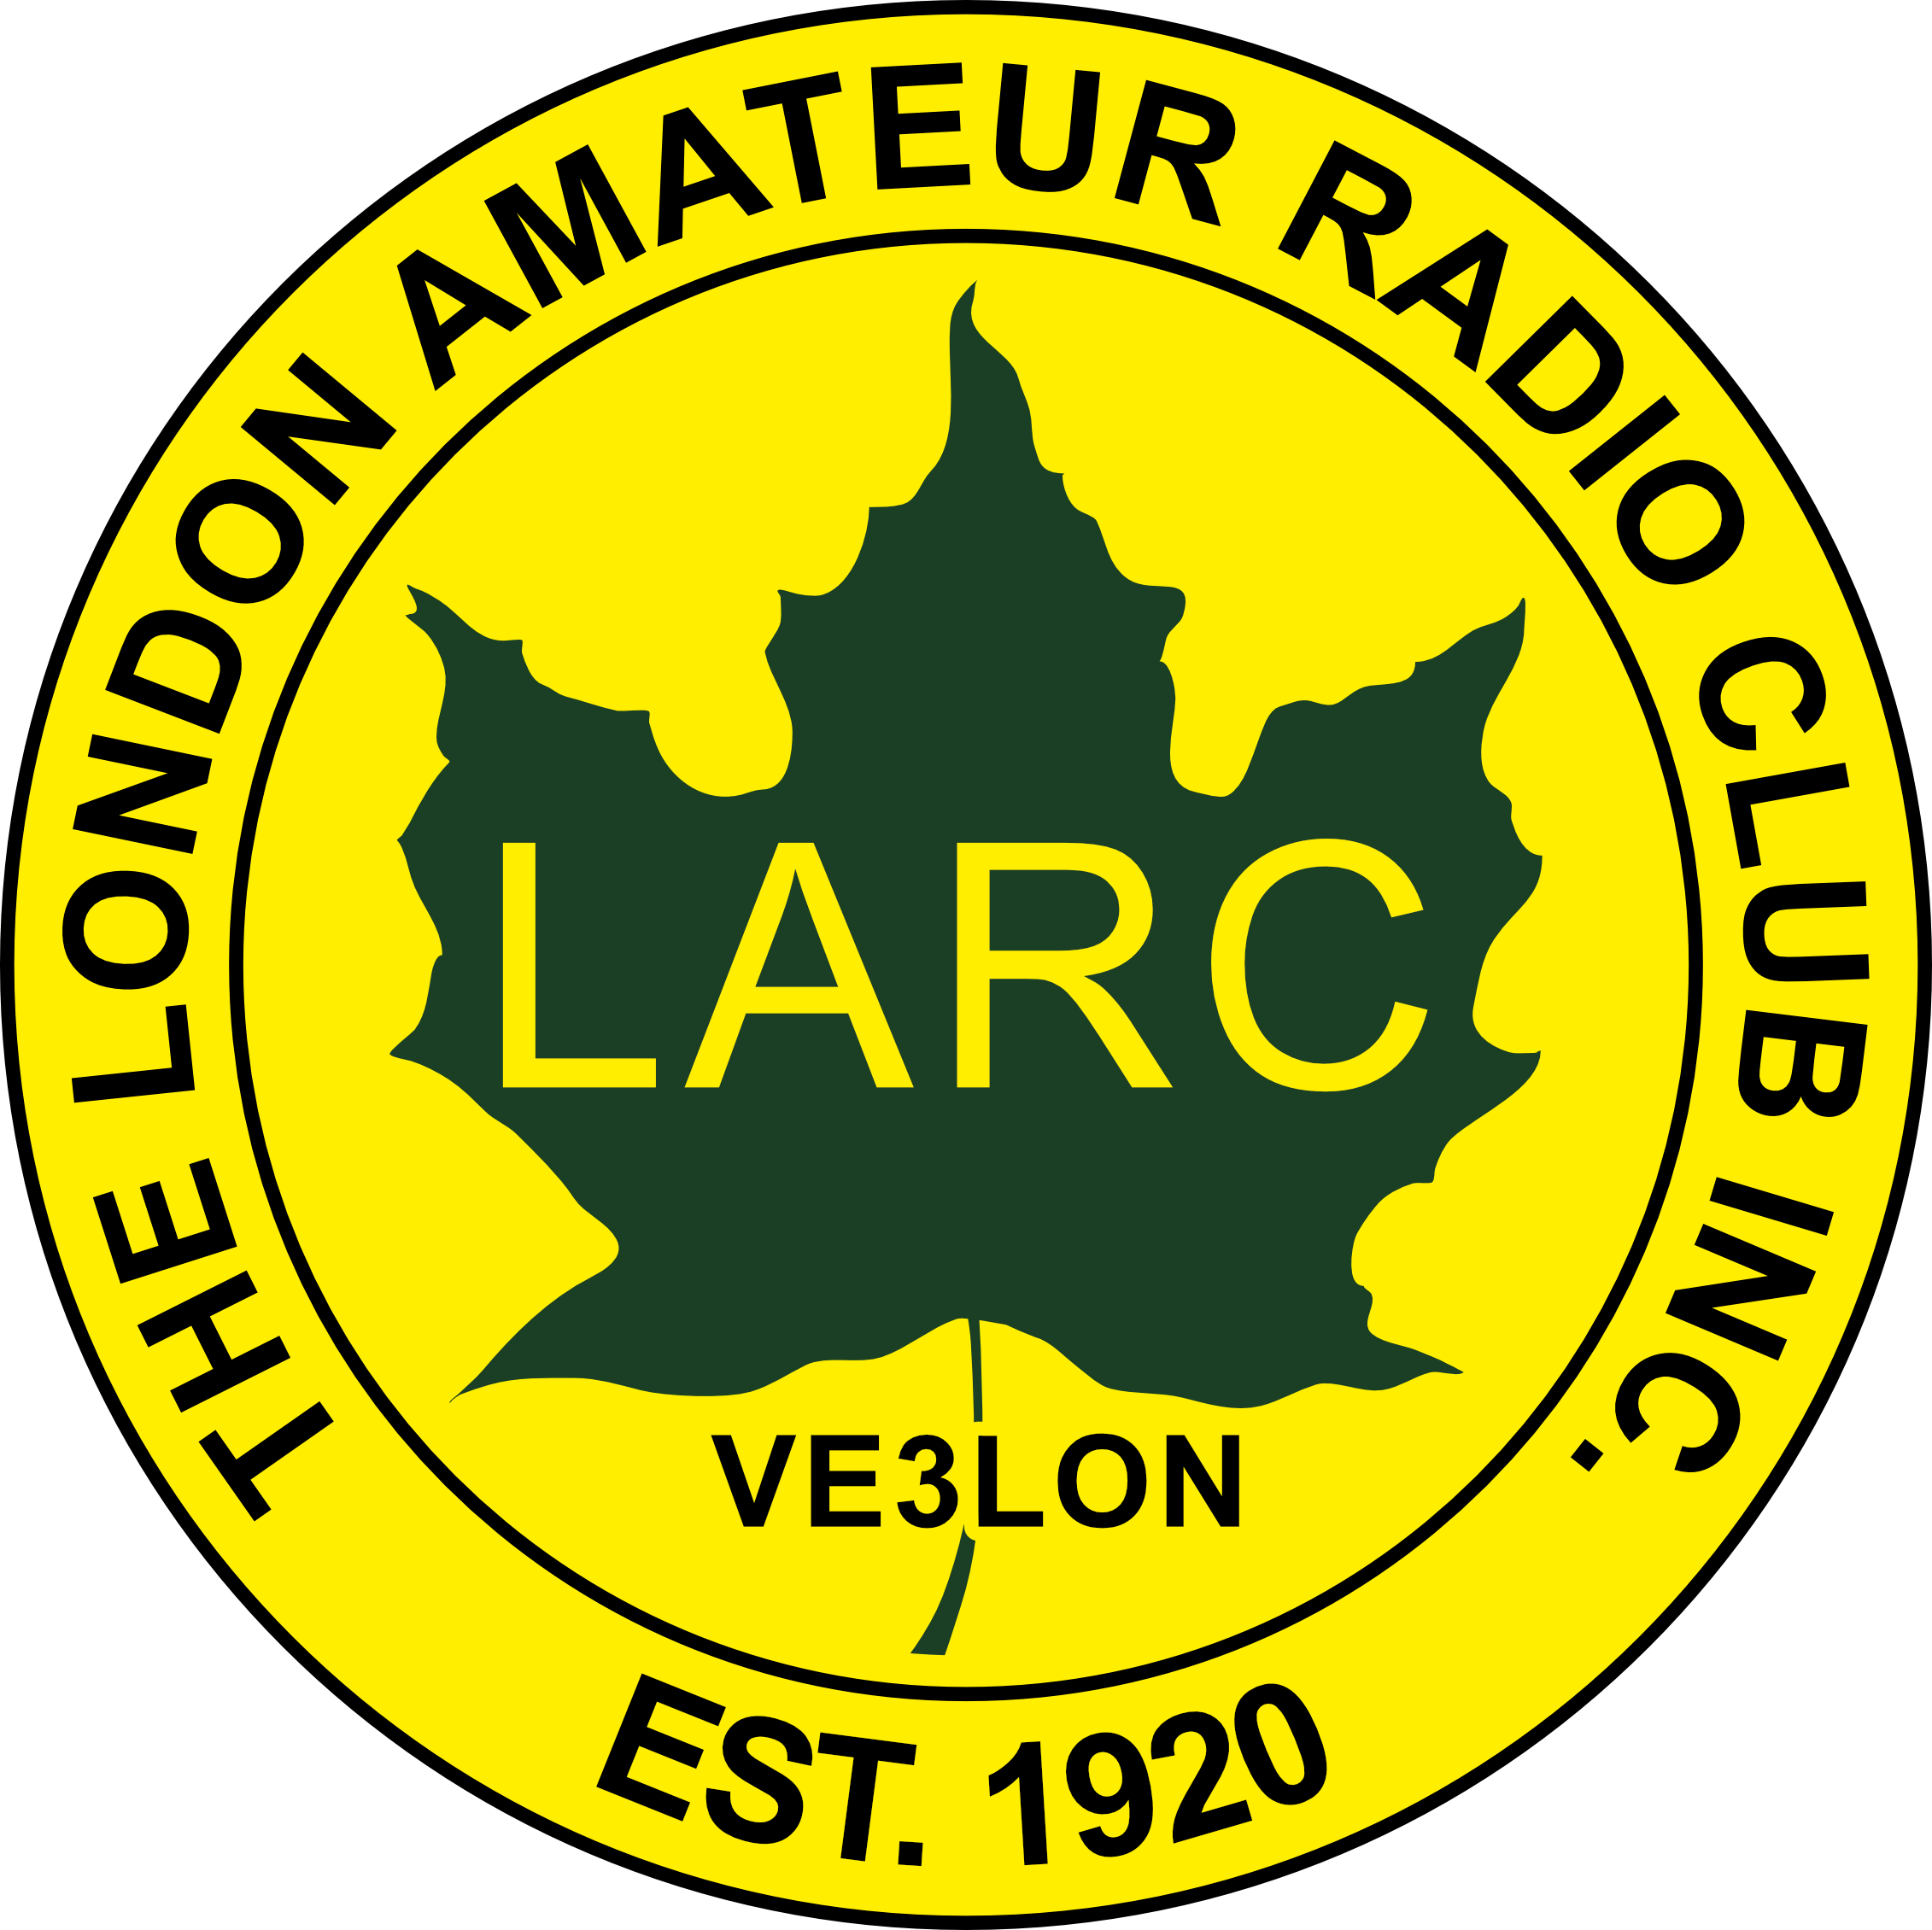 London Amateur Radio Club